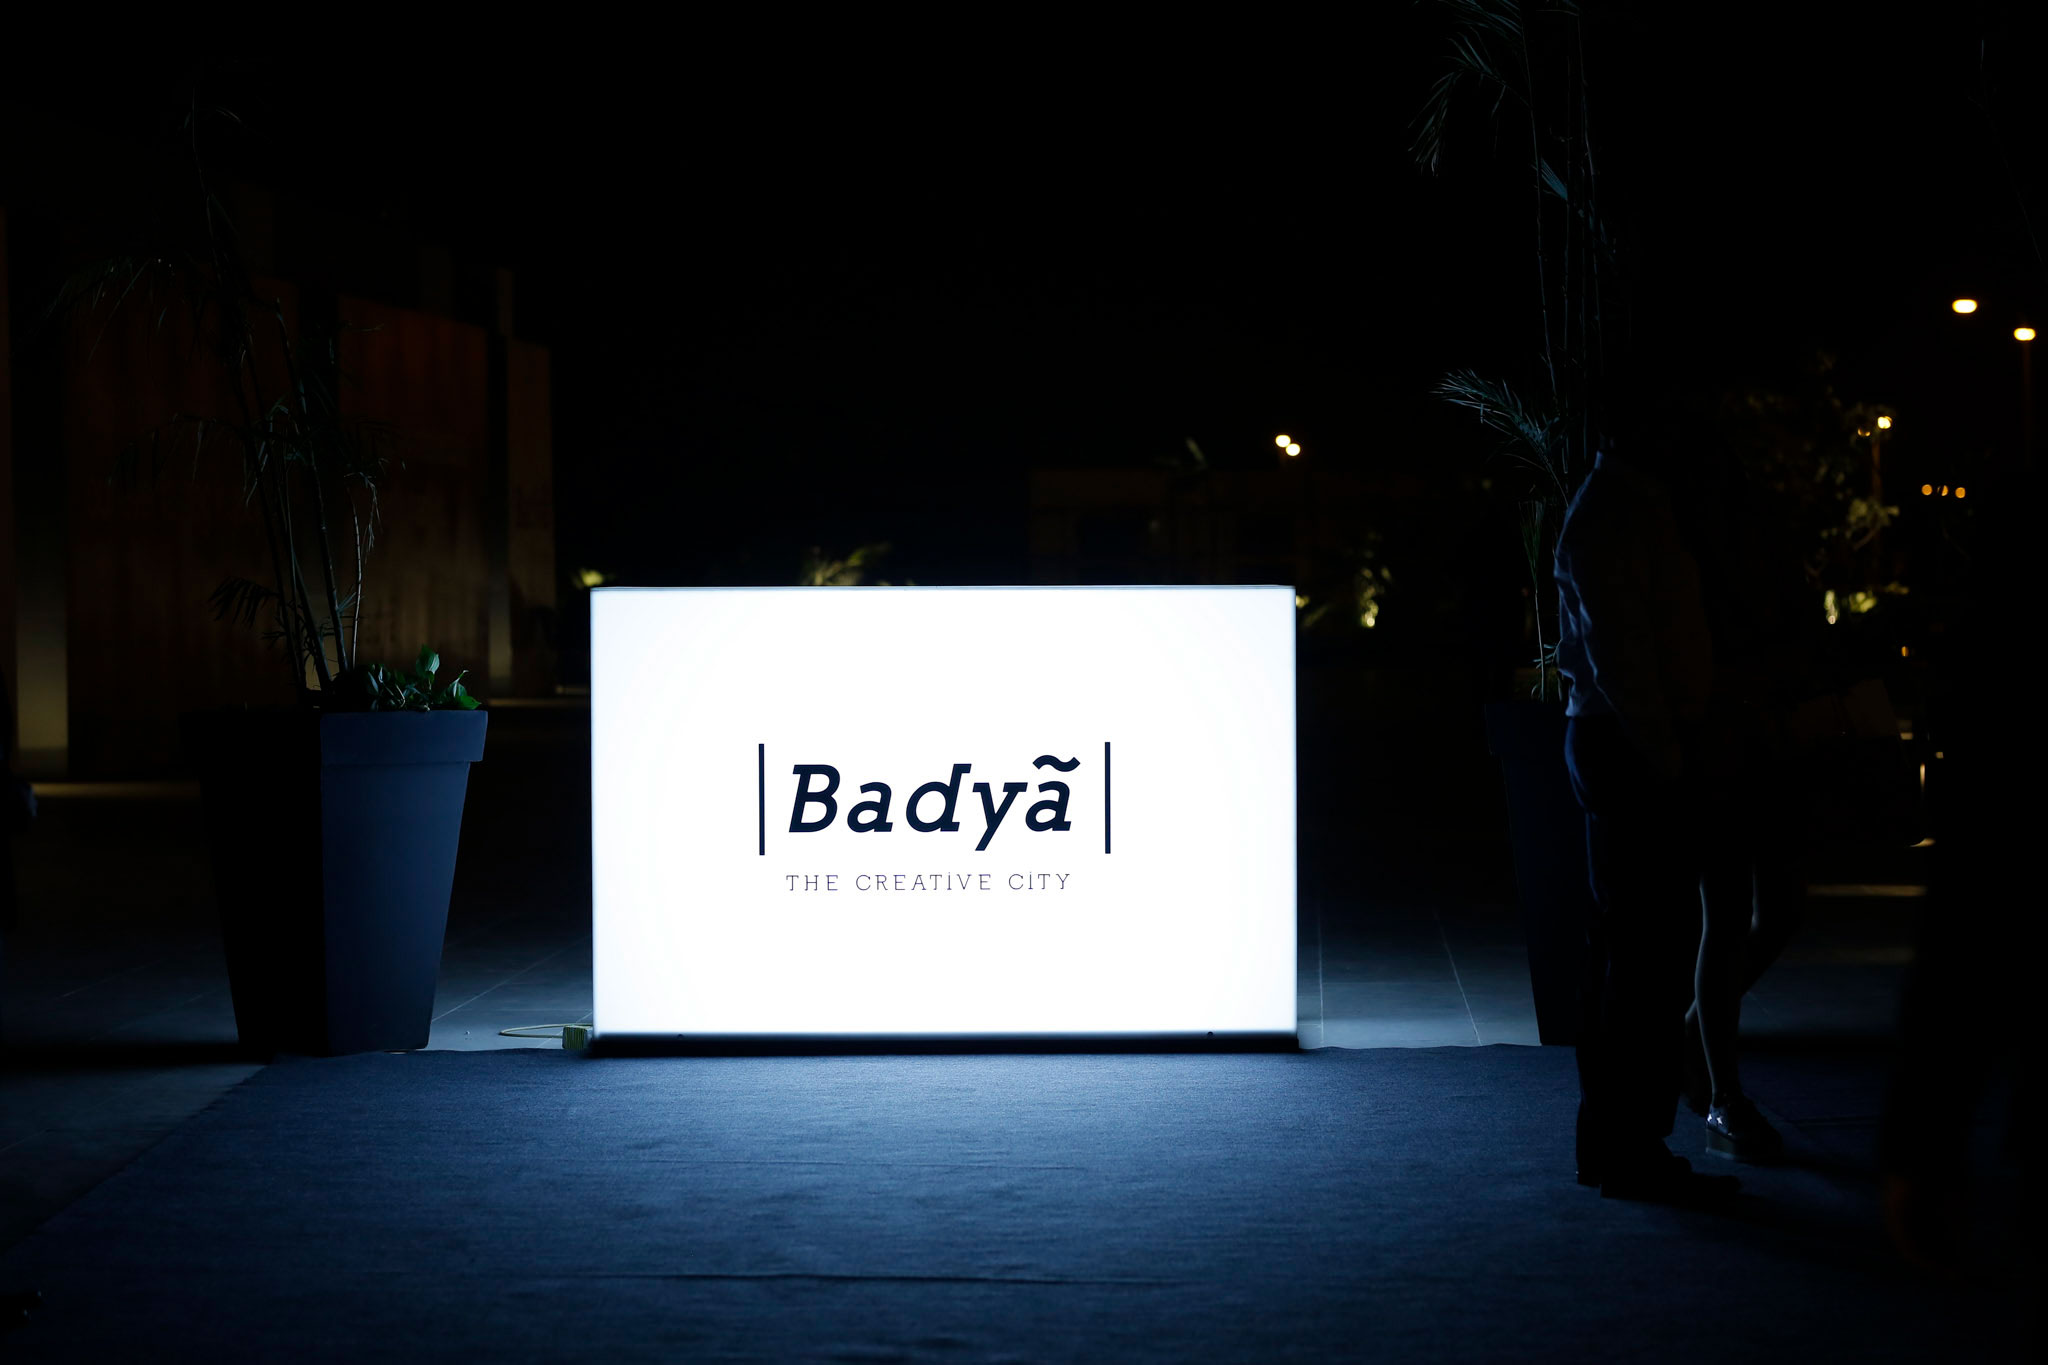  Badya Launch event palm hills development  